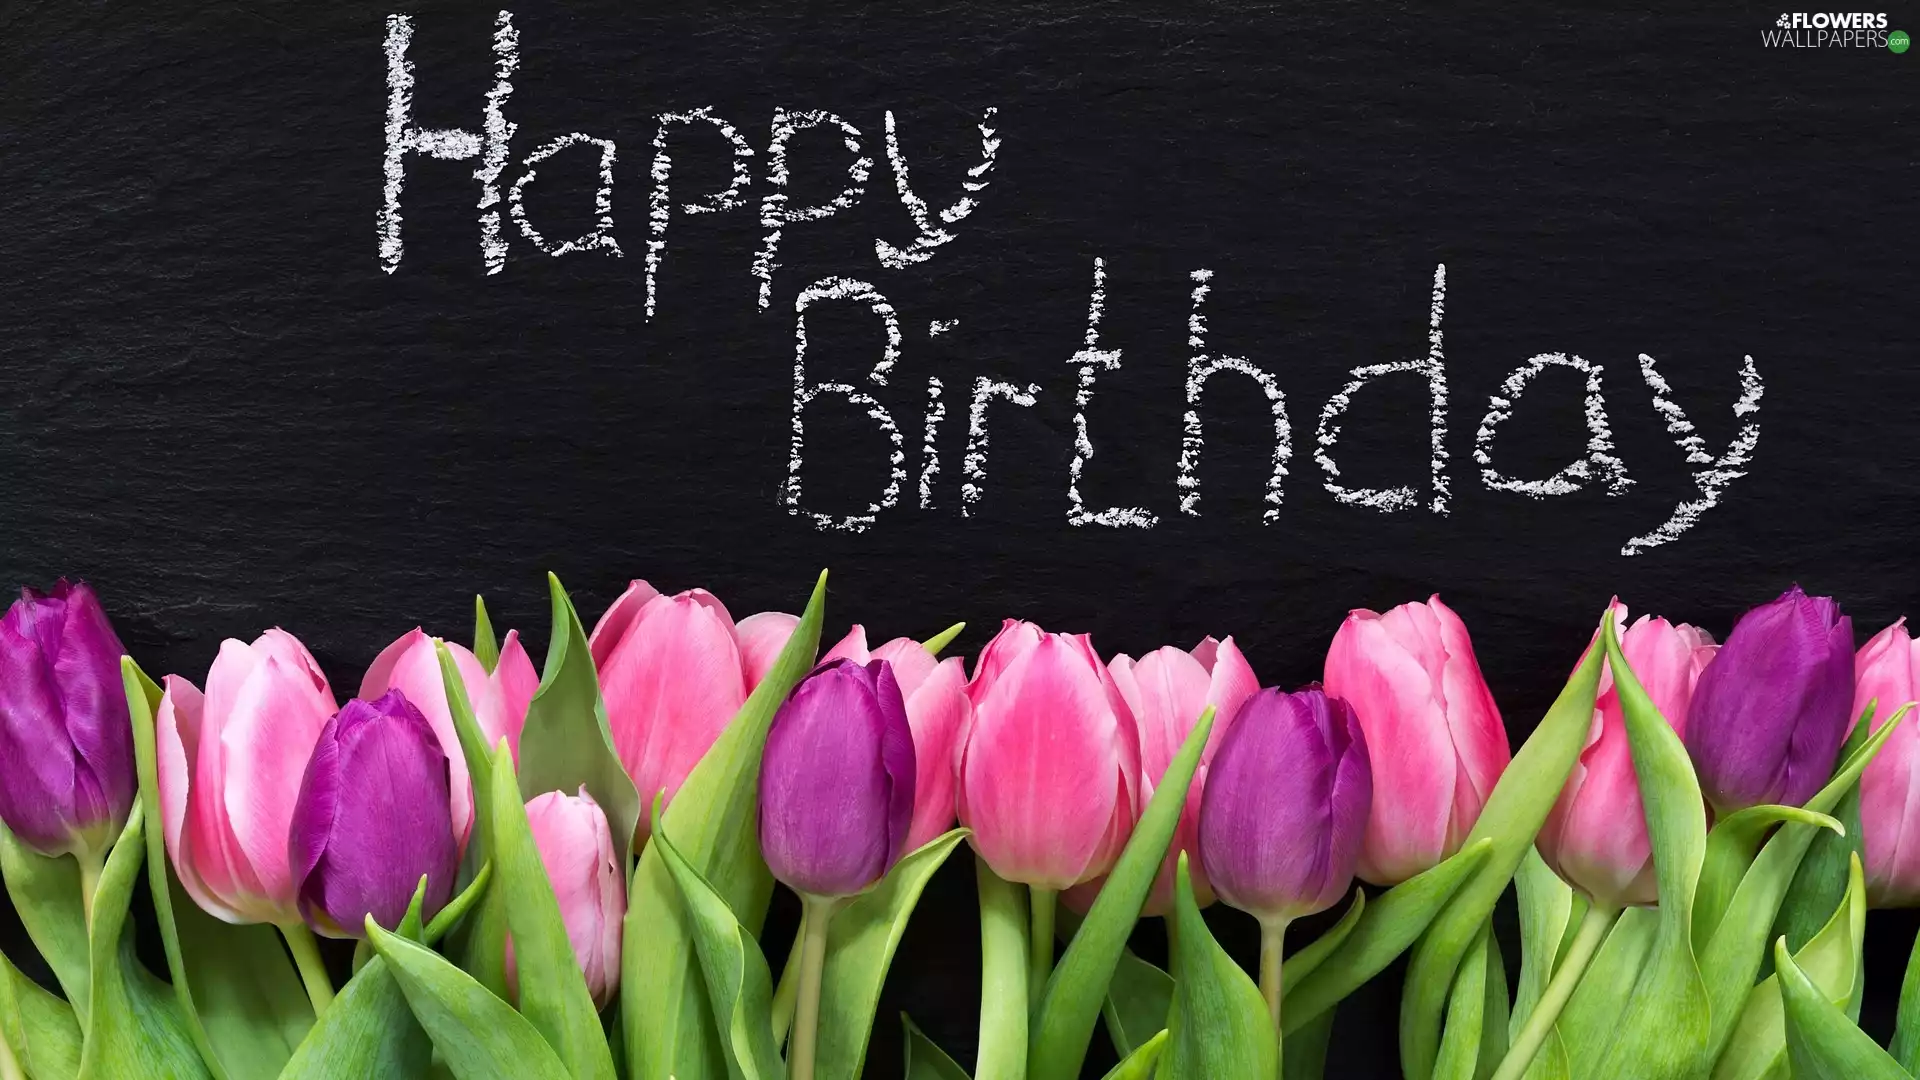 birthday, table, Tulips, text